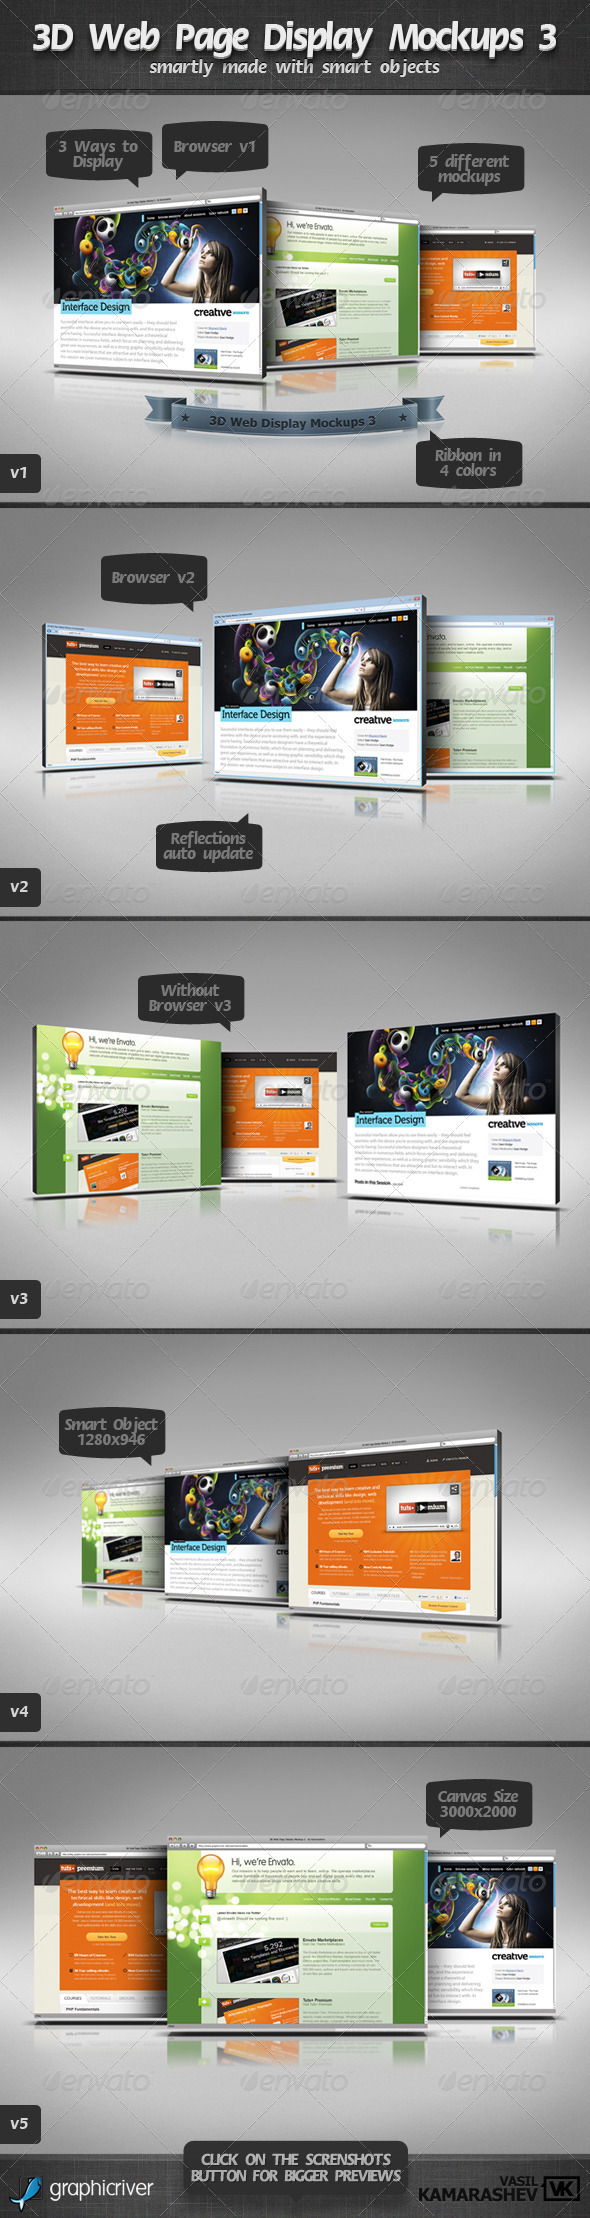 Download 3D Web Page Display Mockups 3 | GraphicRiver